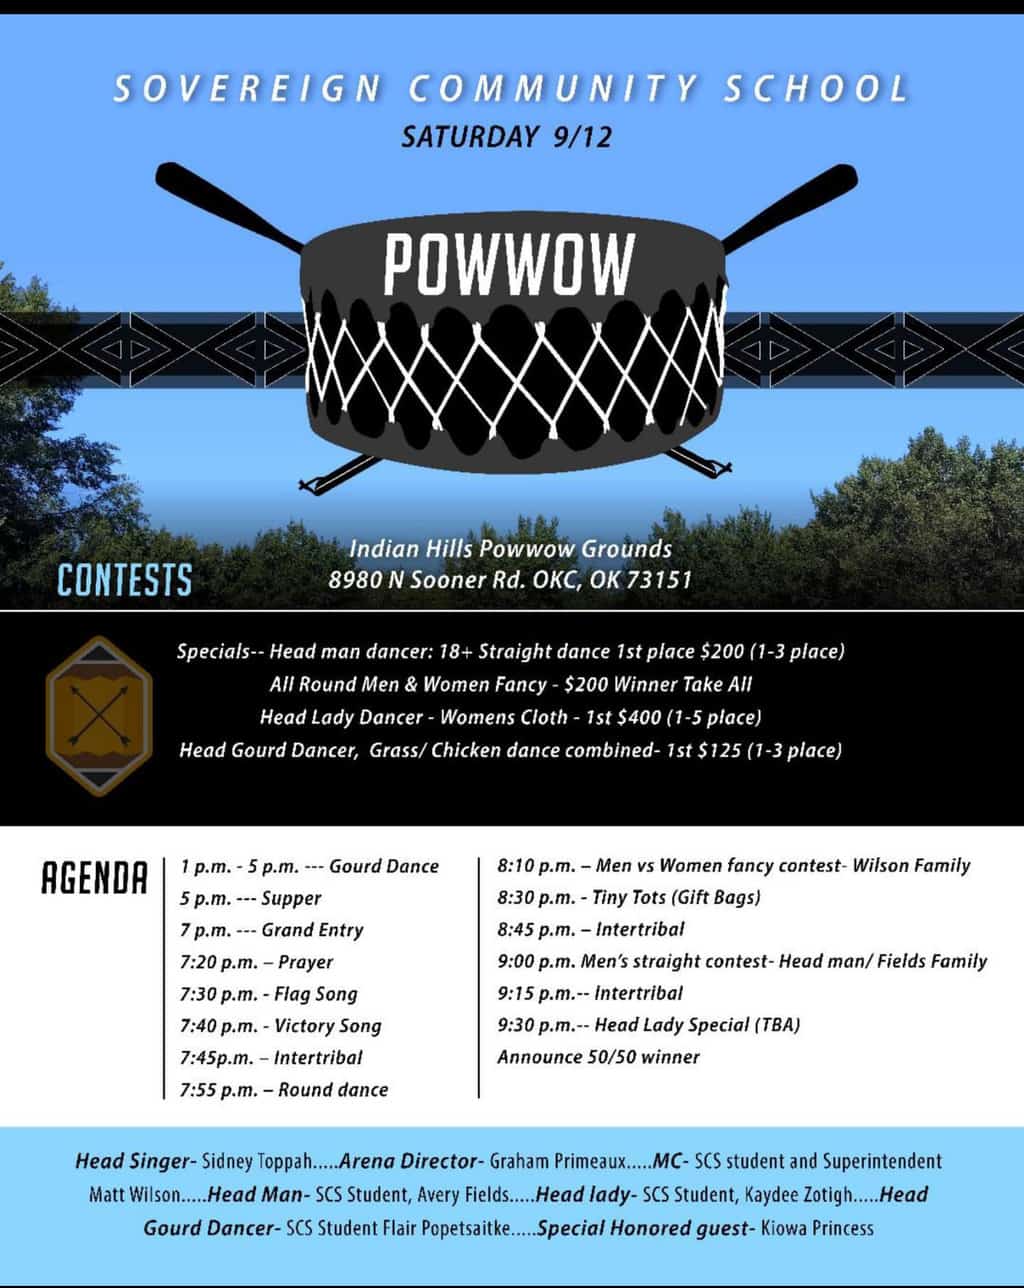 Sovereign Community School Powwow